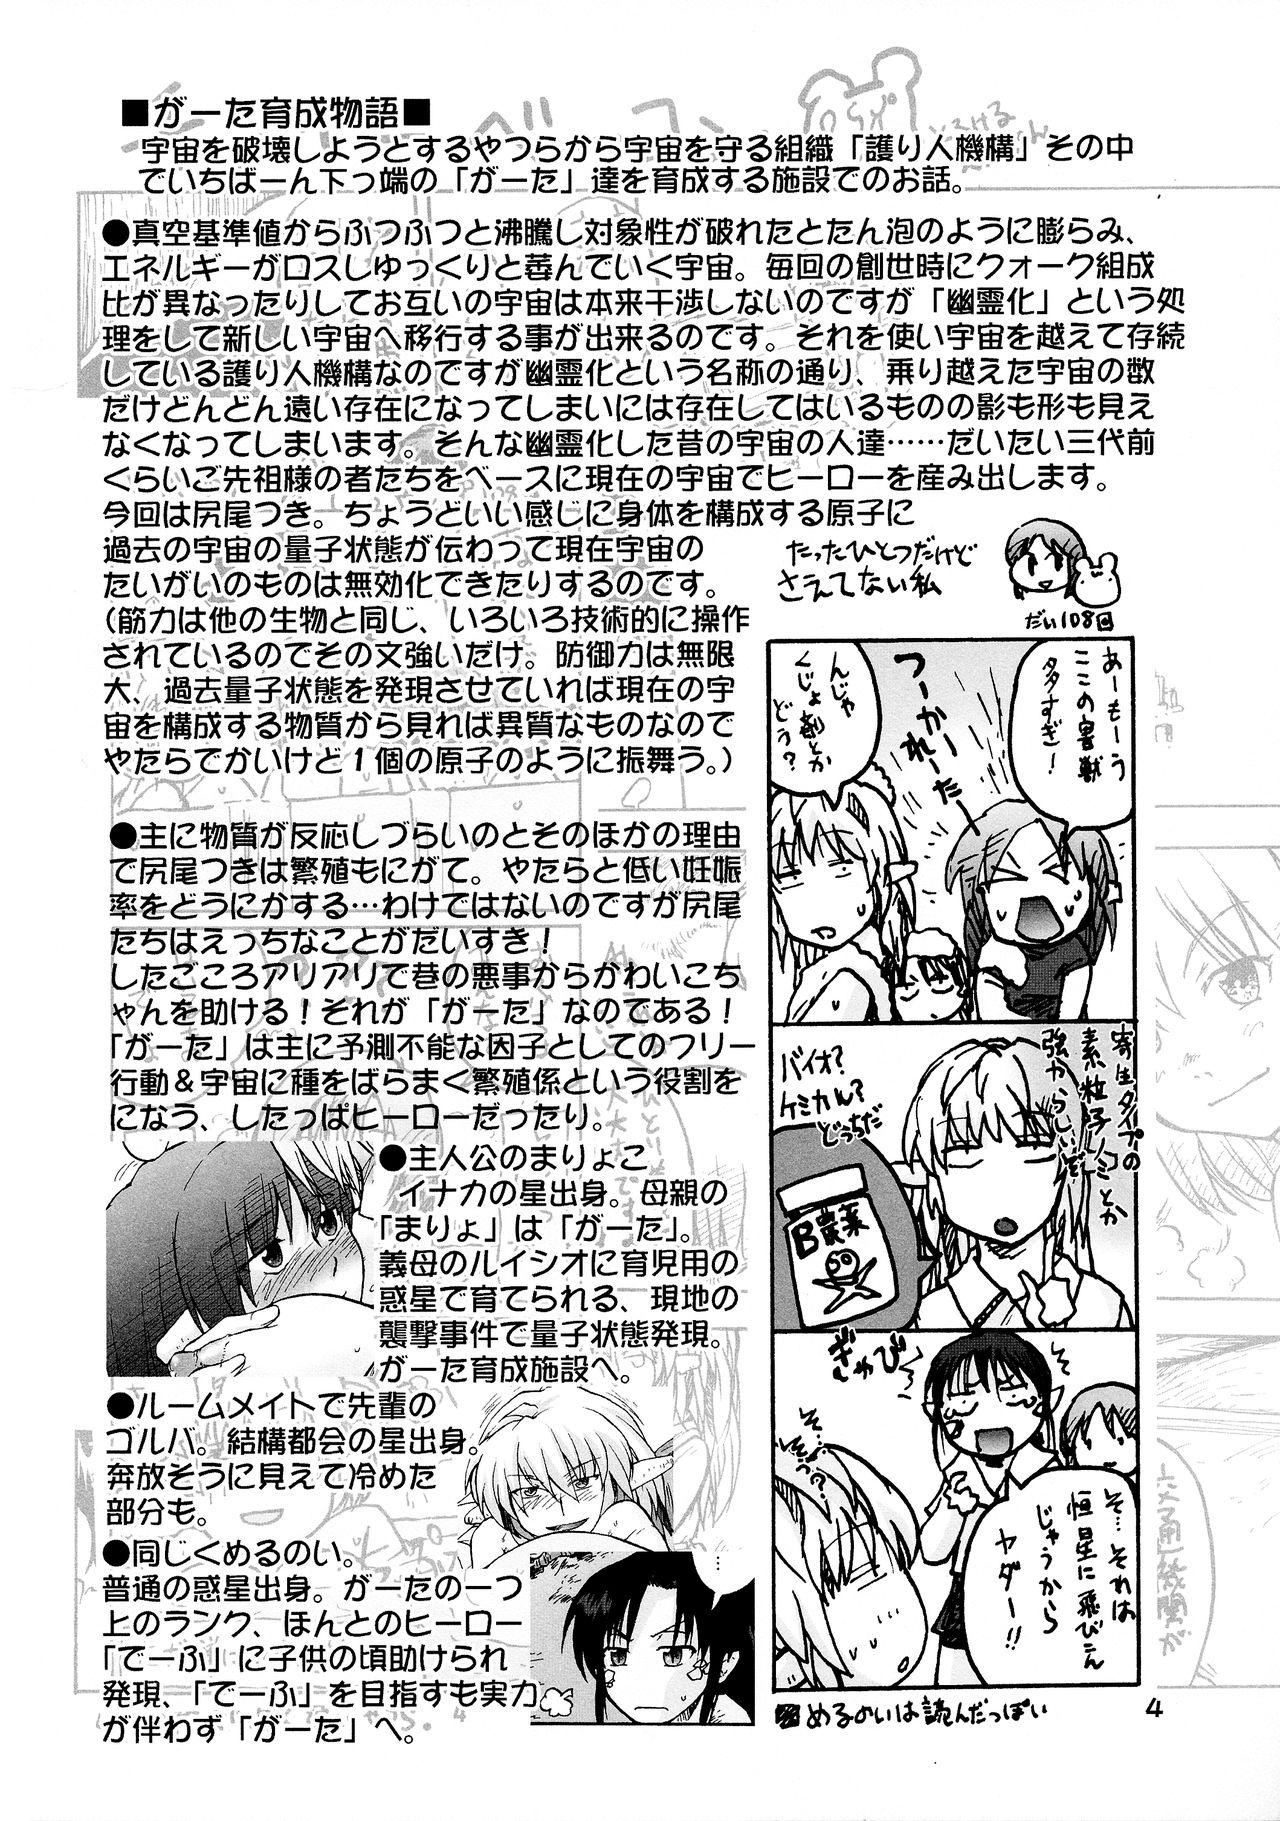 Manga Chocolate Bustier vol. 4 3